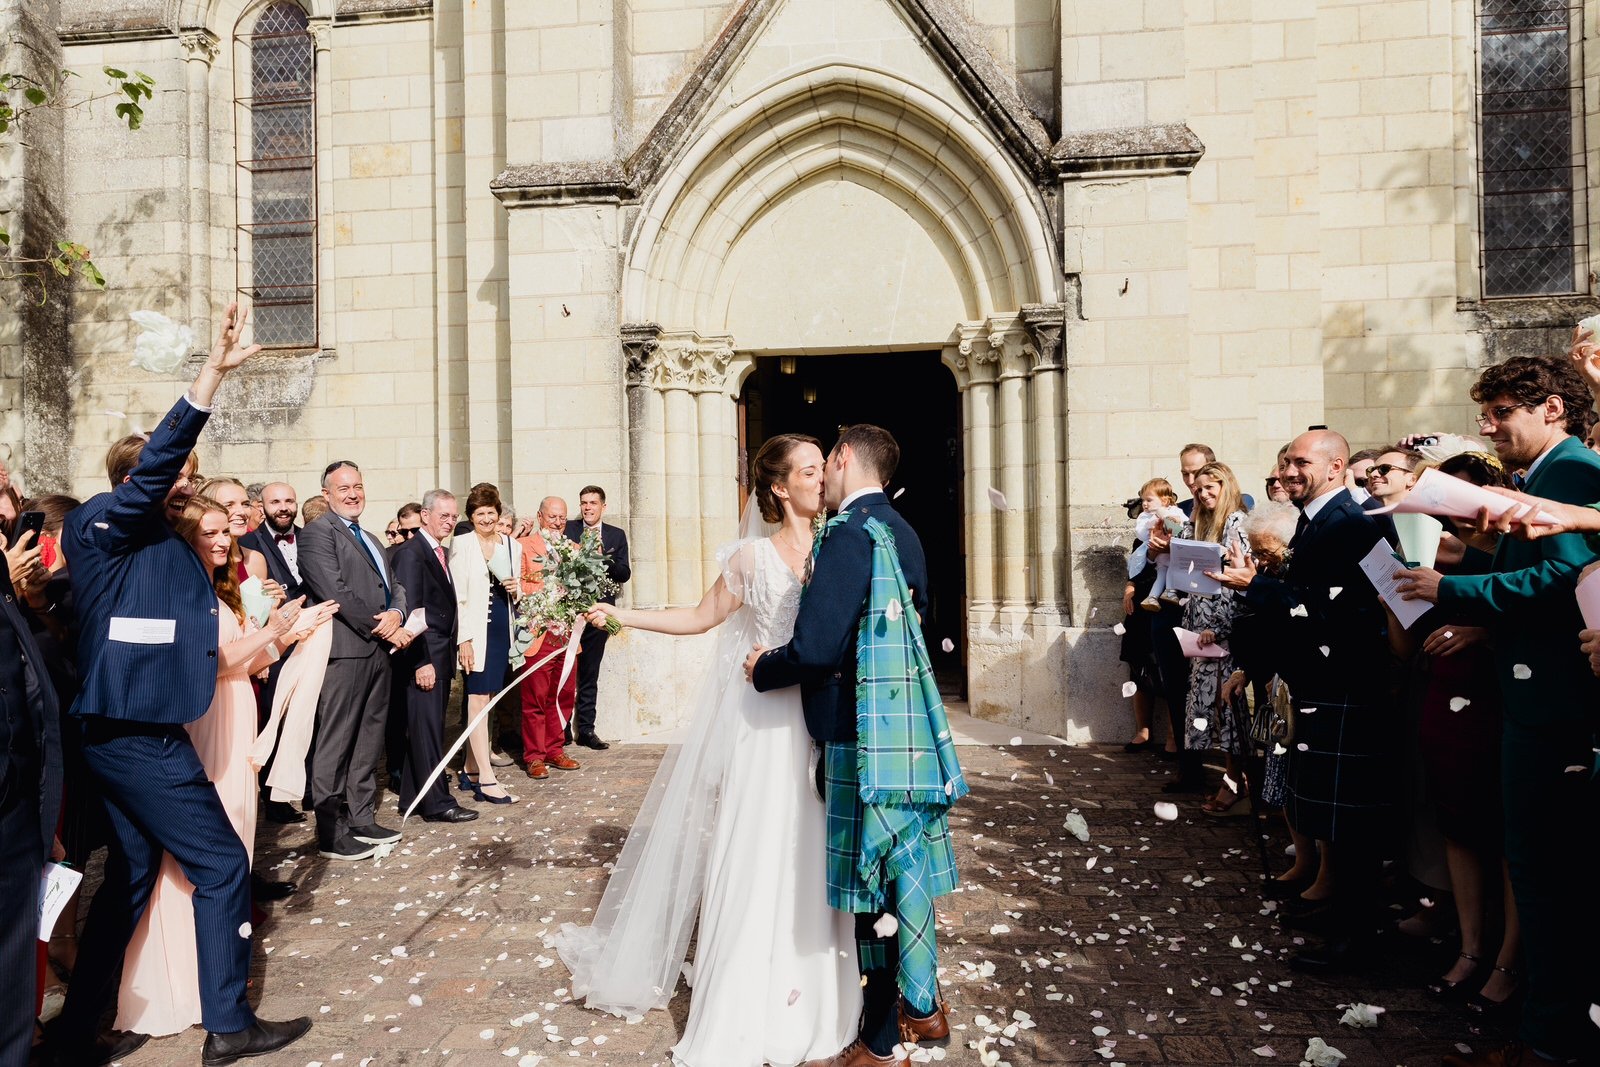 Mariage Irlandais en France